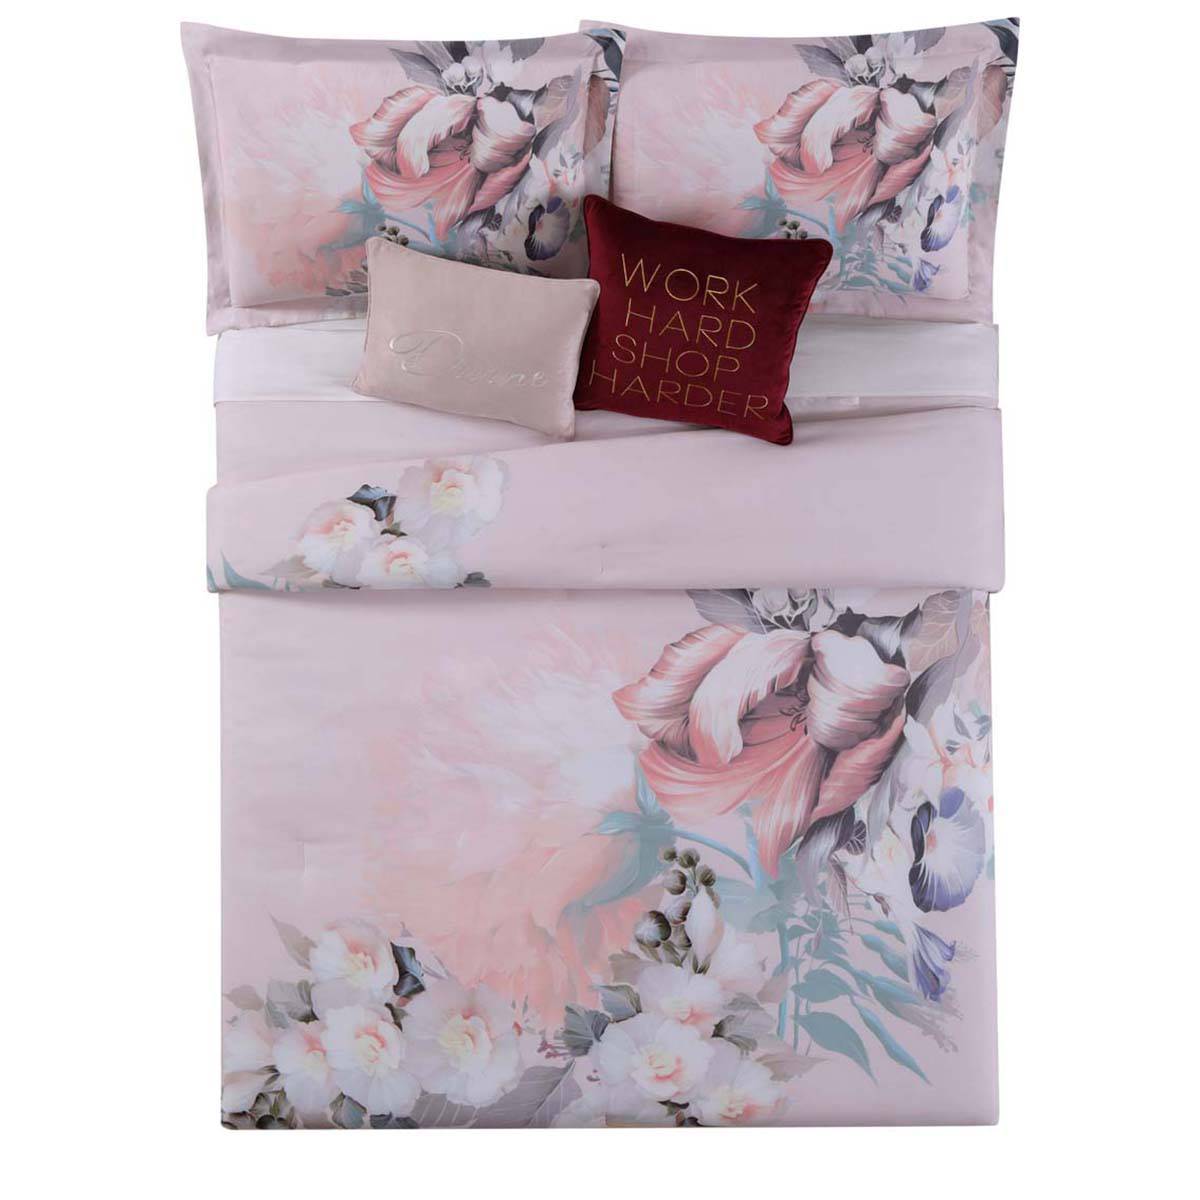 Christian Siriano New York(R) Dreamy Floral Comforter Set